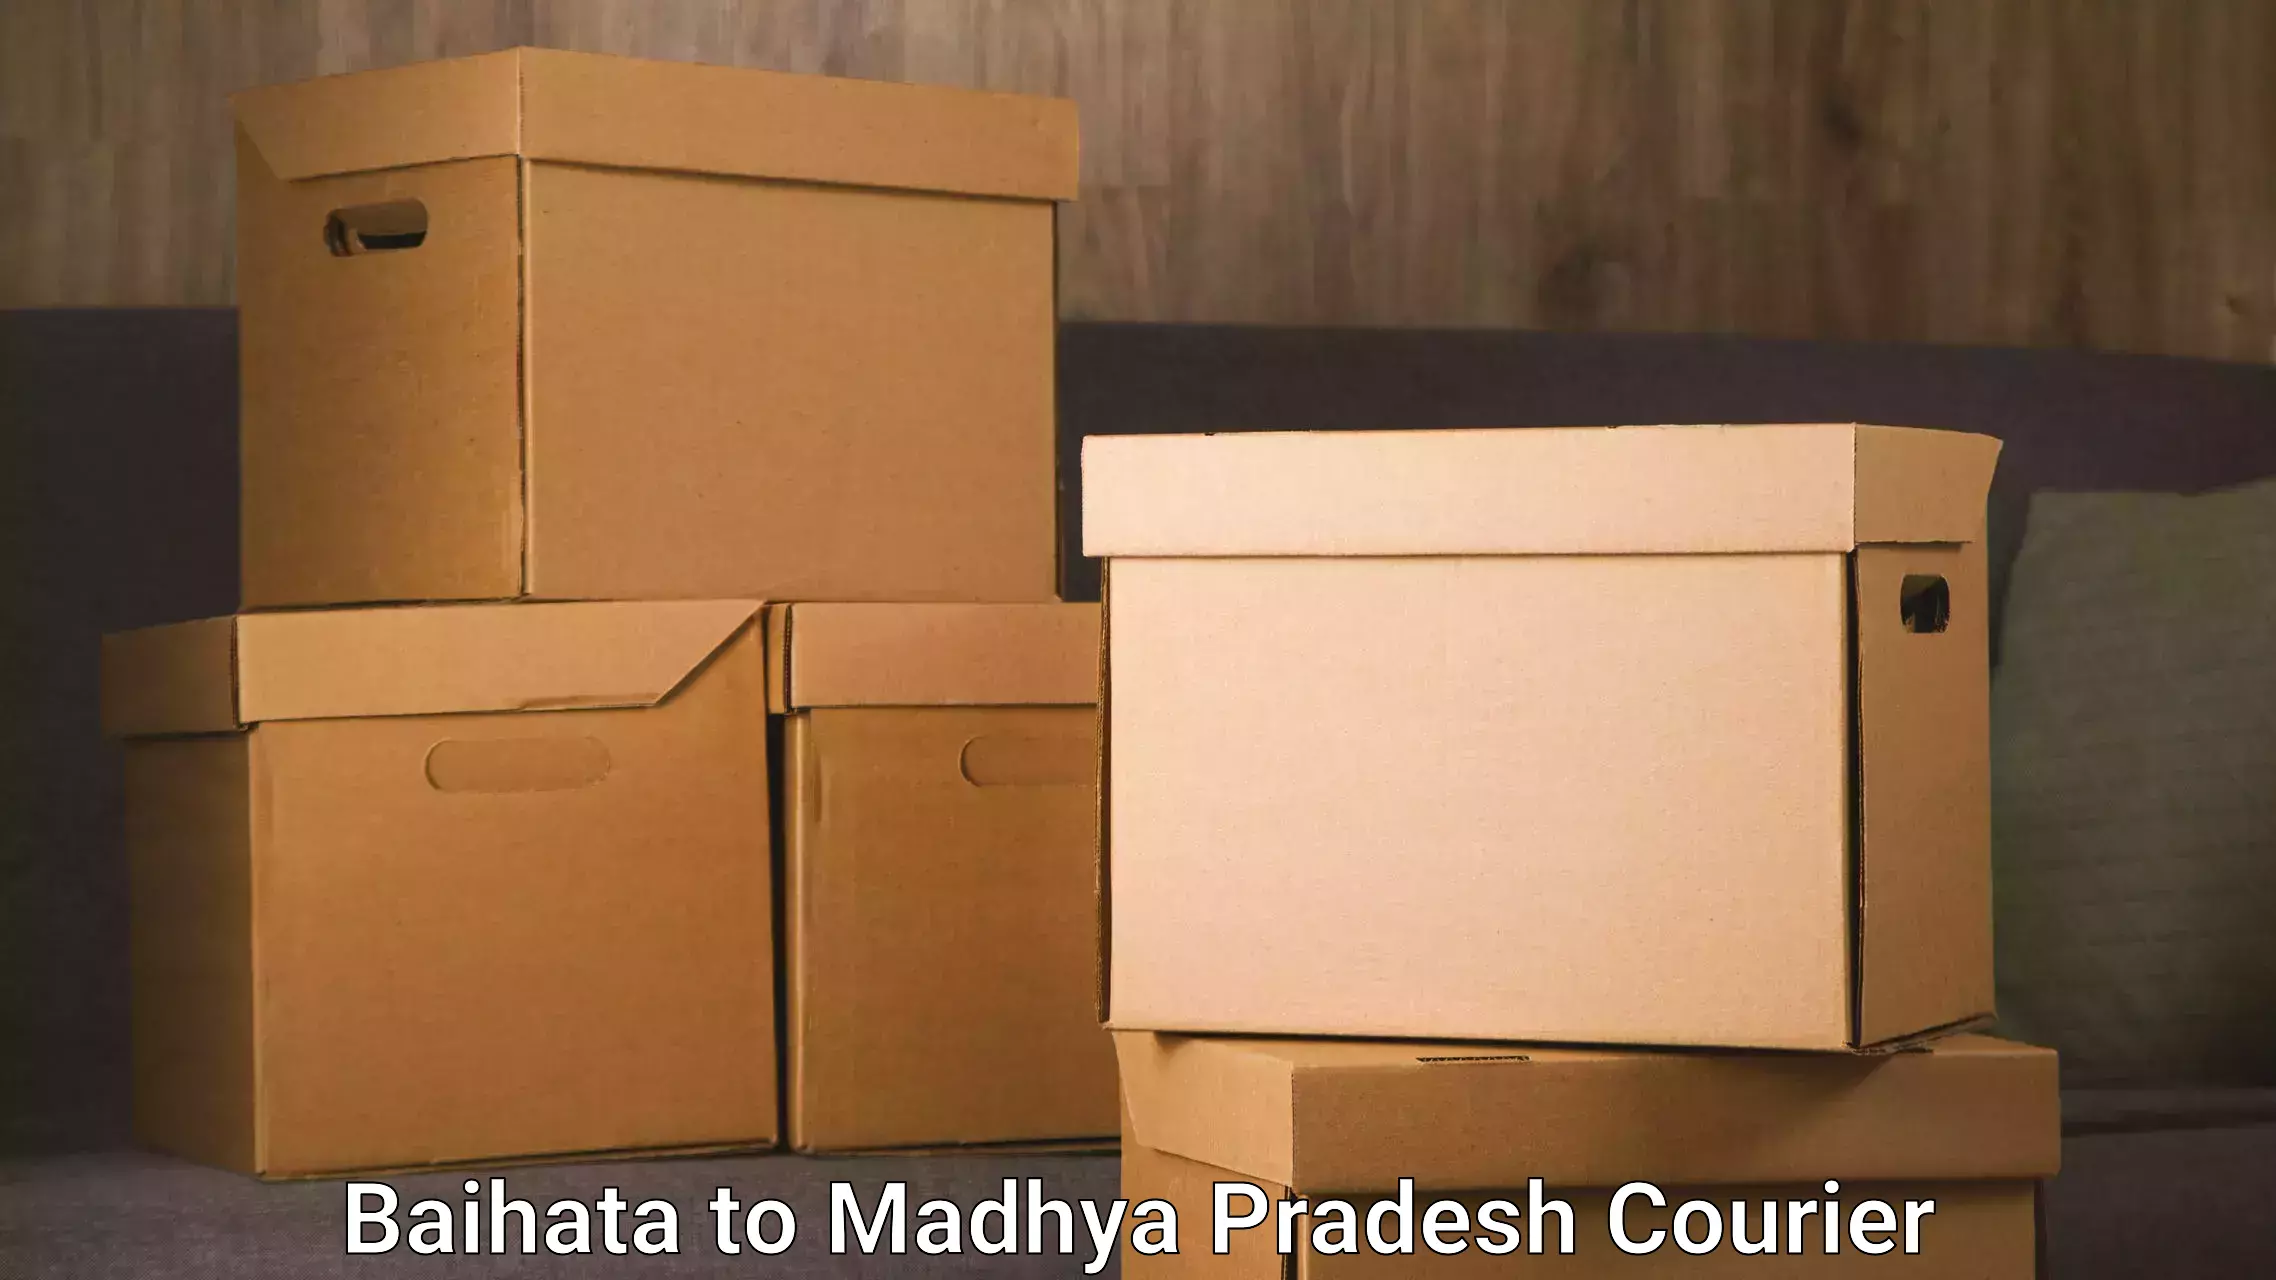 State-of-the-art courier technology Baihata to Mundi